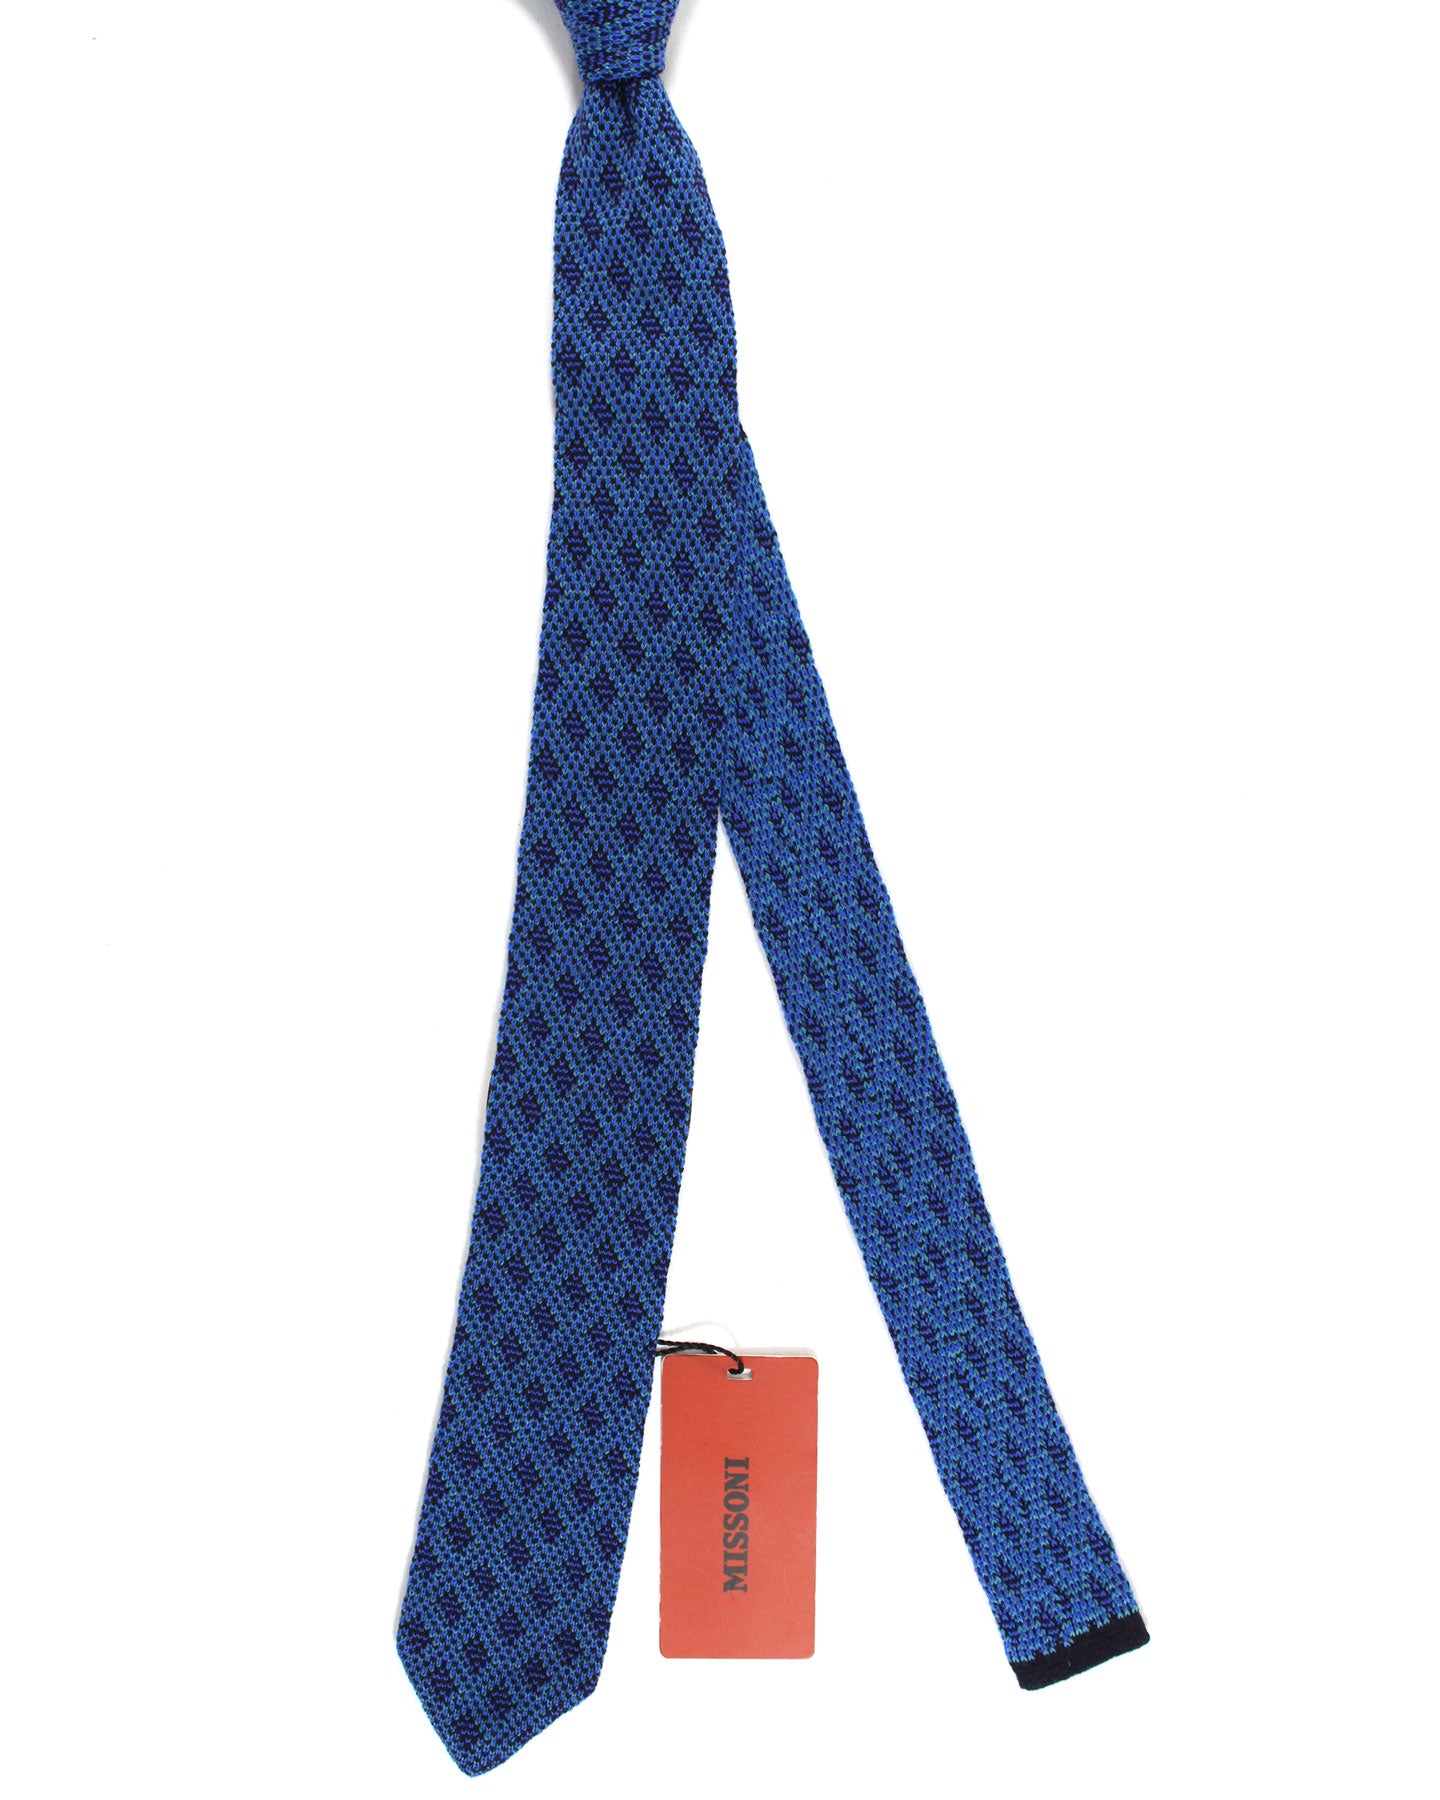 Missoni Knitted Tie Dark Blue Green Geometric Design